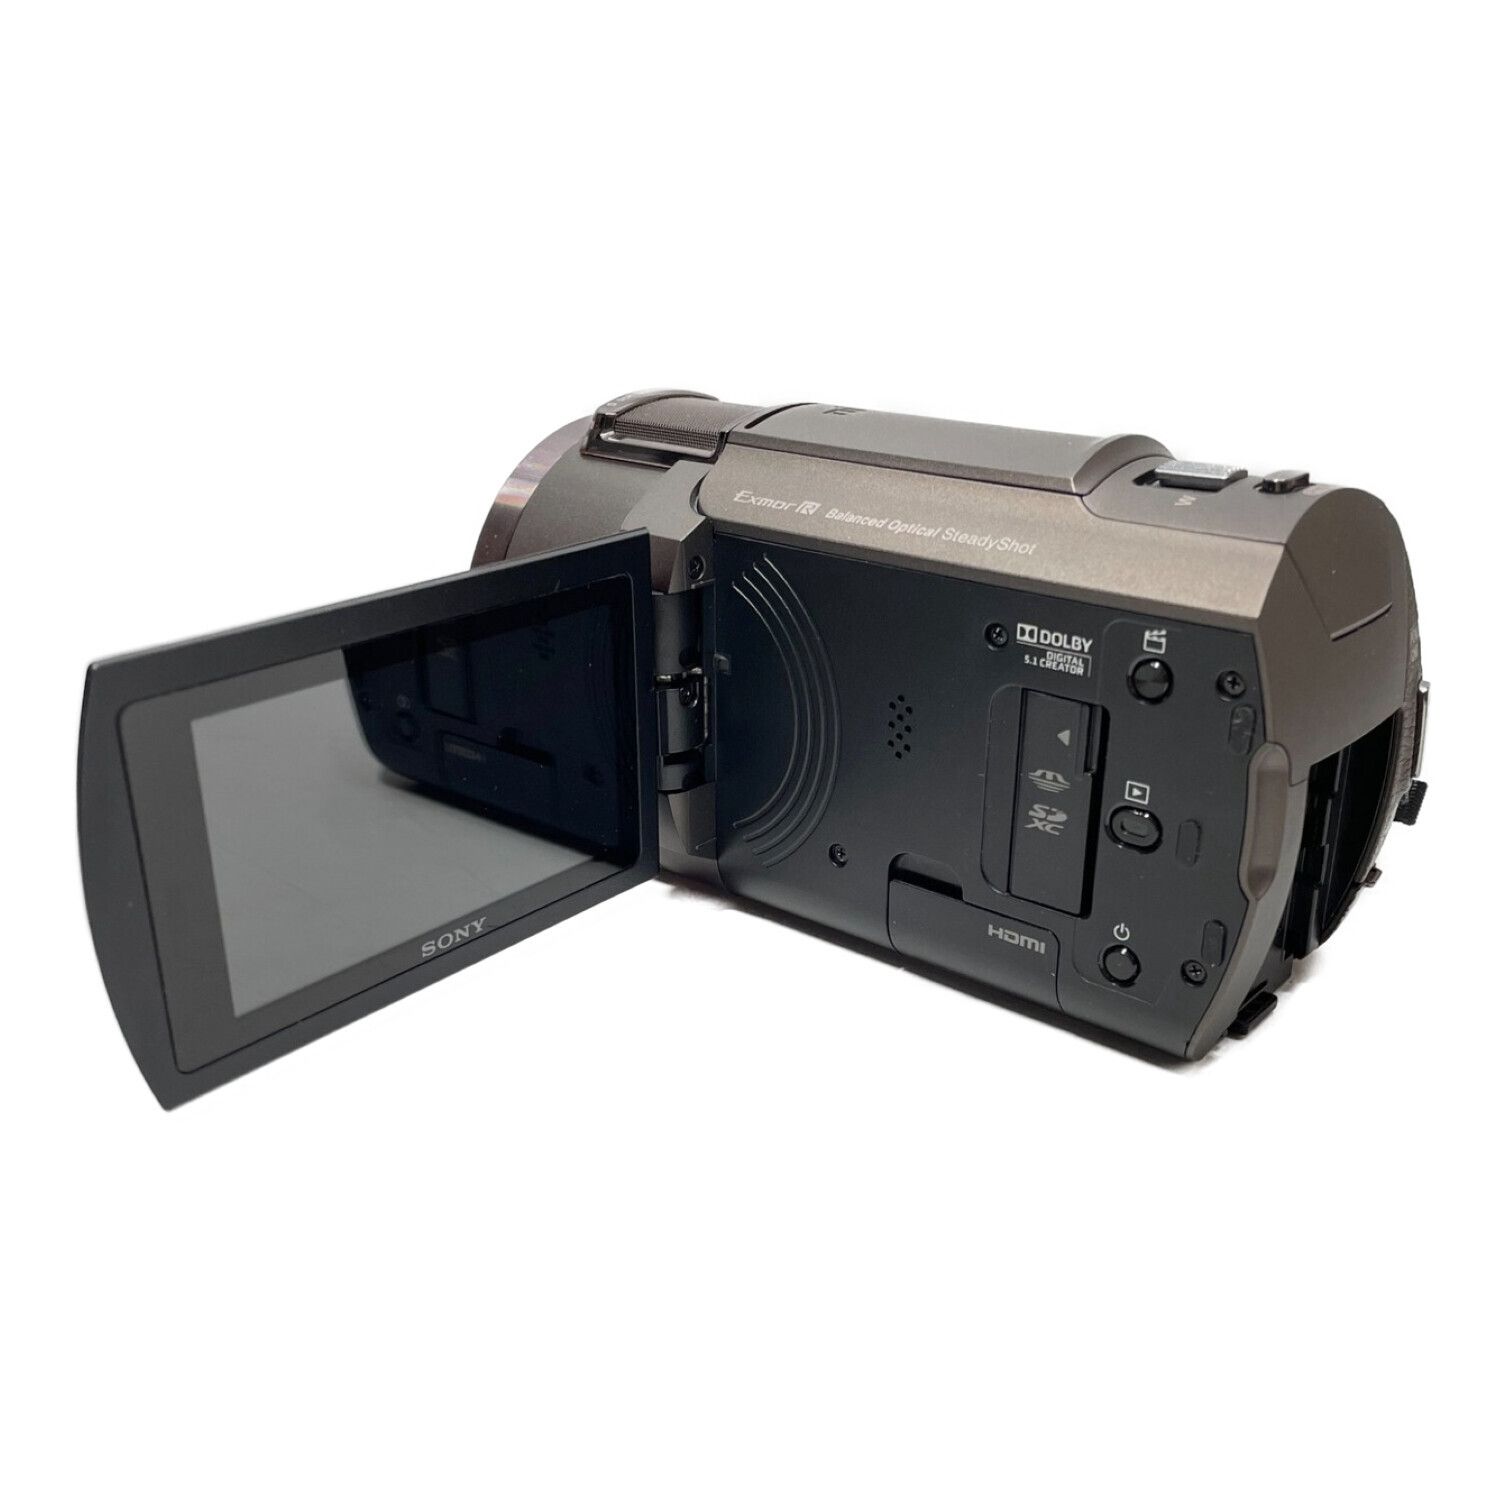 SONY(ソニー) 4Kデジタルビデオカメラ FDR-AX45｜トレファクONLINE